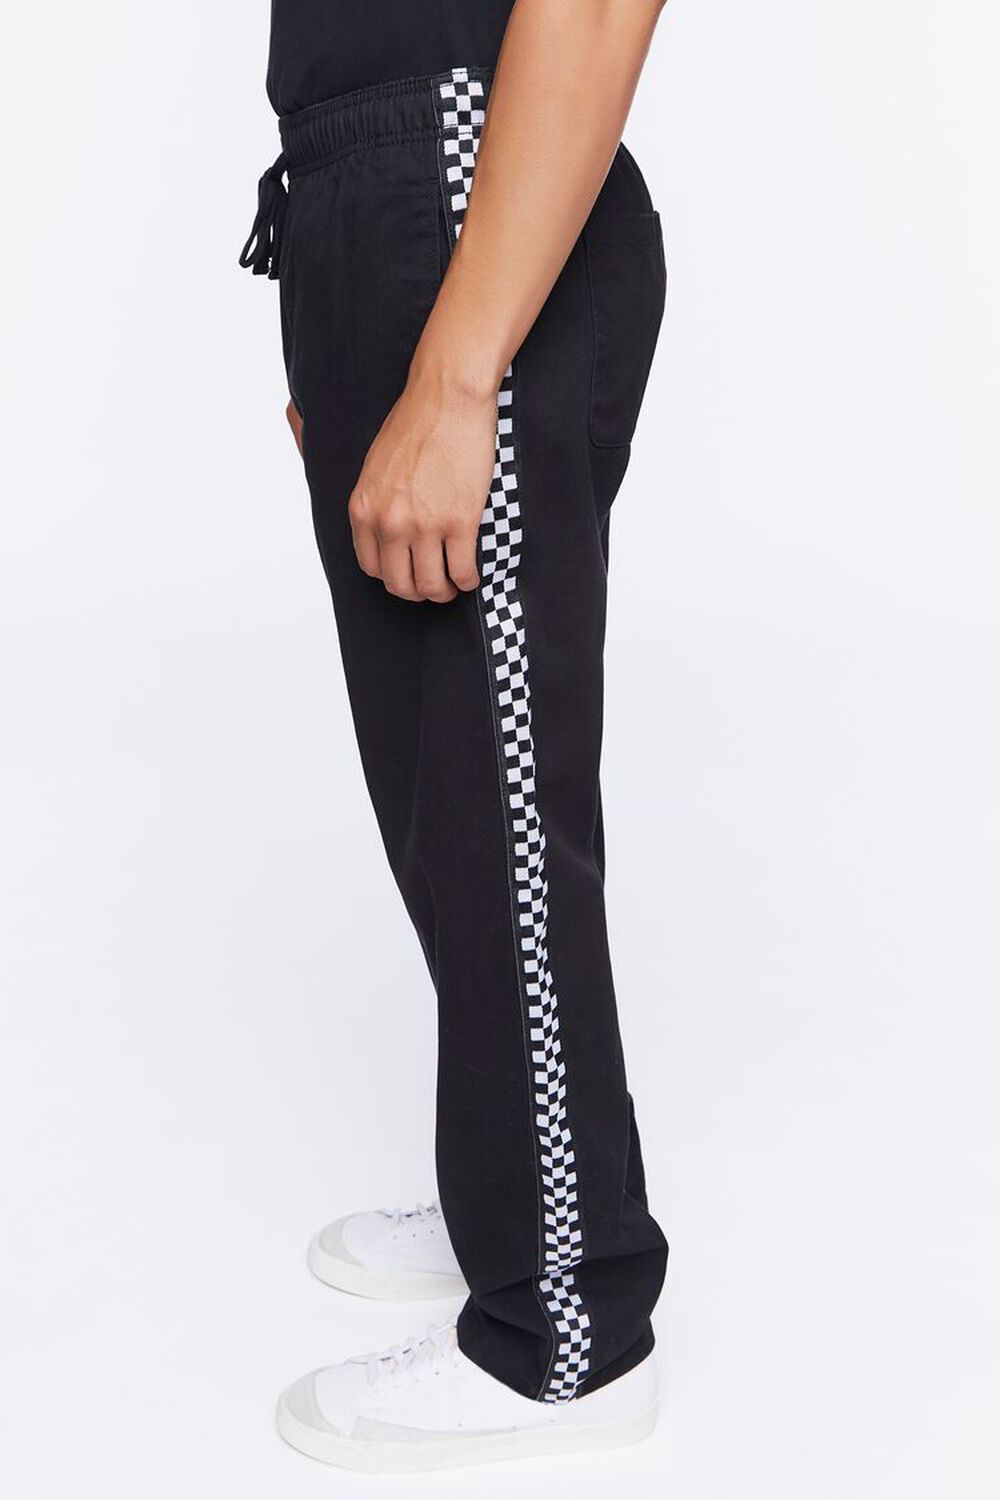 BLACK/WHITE Checkered-Trim Drawstring Pants, image 3